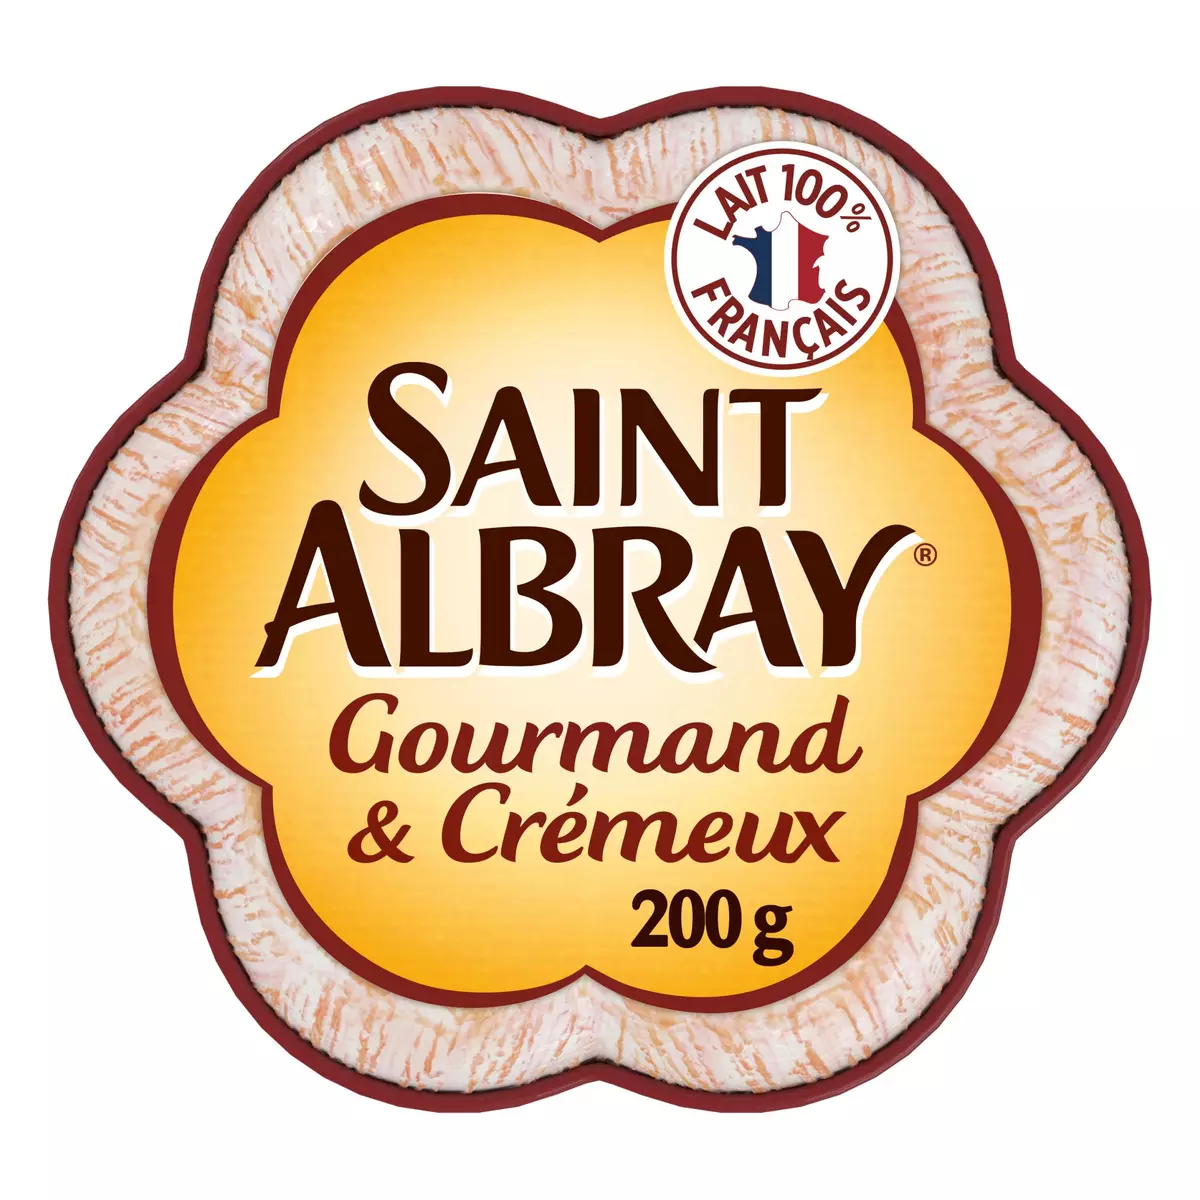 SAINT ALBRAY Fromage gourmand & crémeux 200g